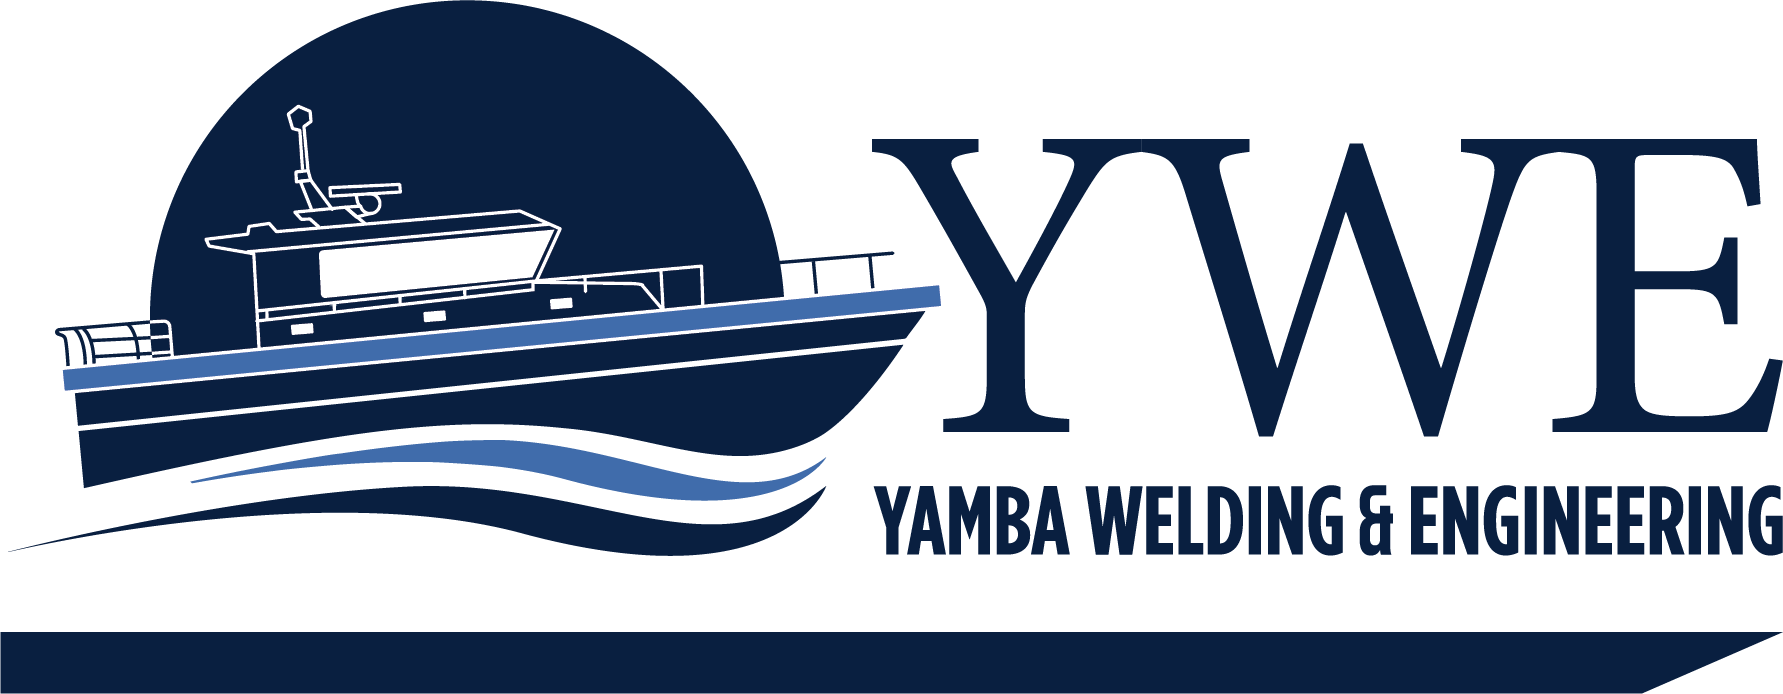 Yamba Welding and Engineering Odoo ERP Implementation Perth WA Australia